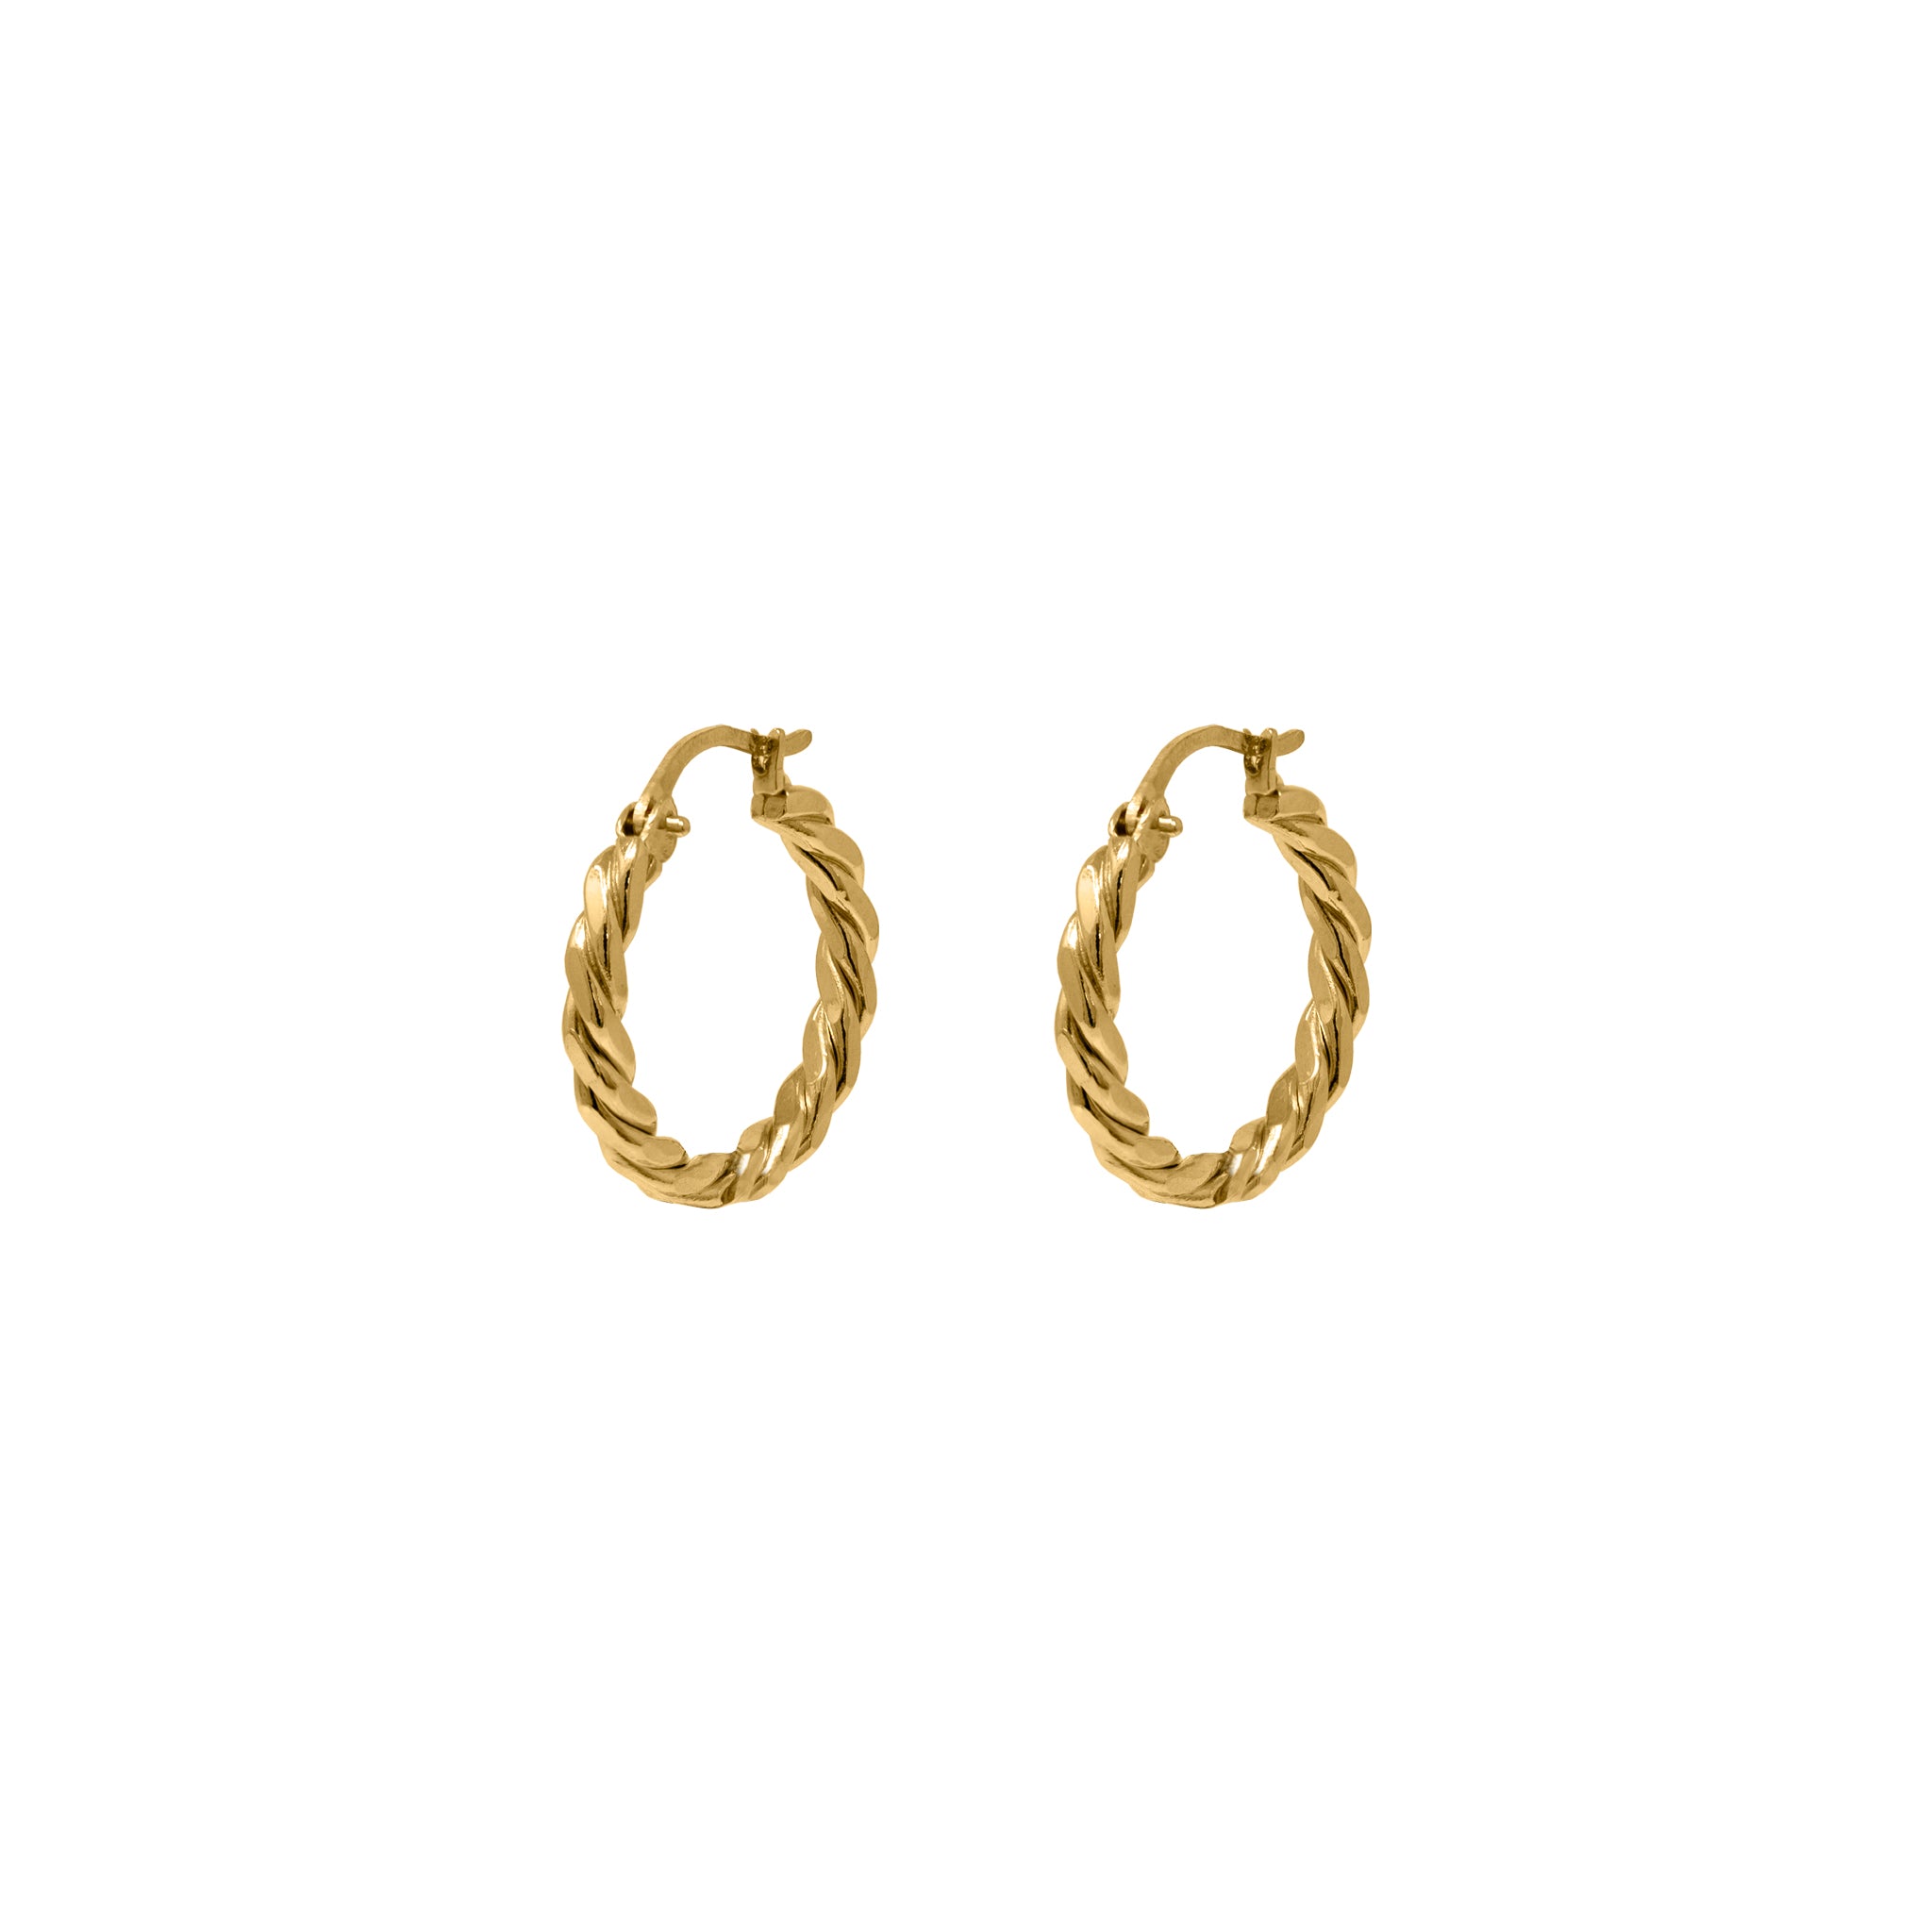 Lina earrings